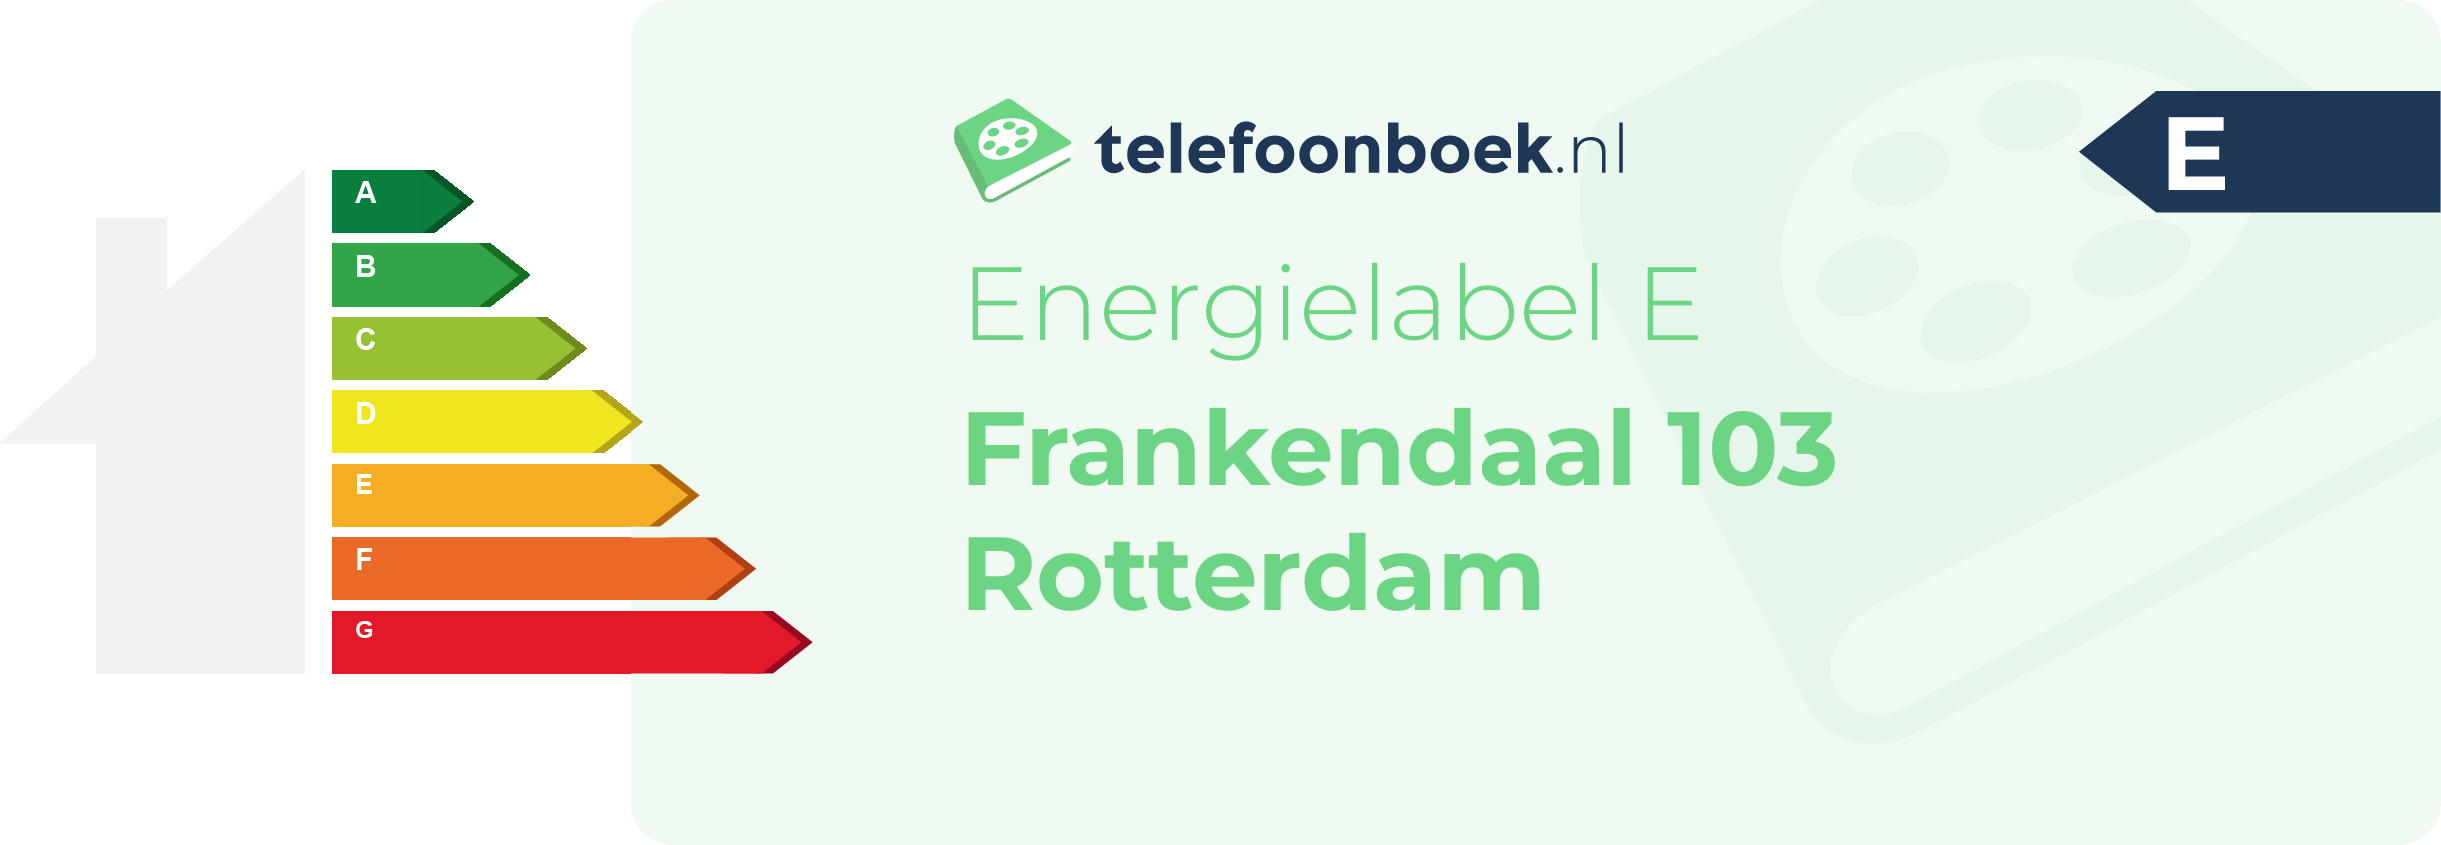 Energielabel Frankendaal 103 Rotterdam